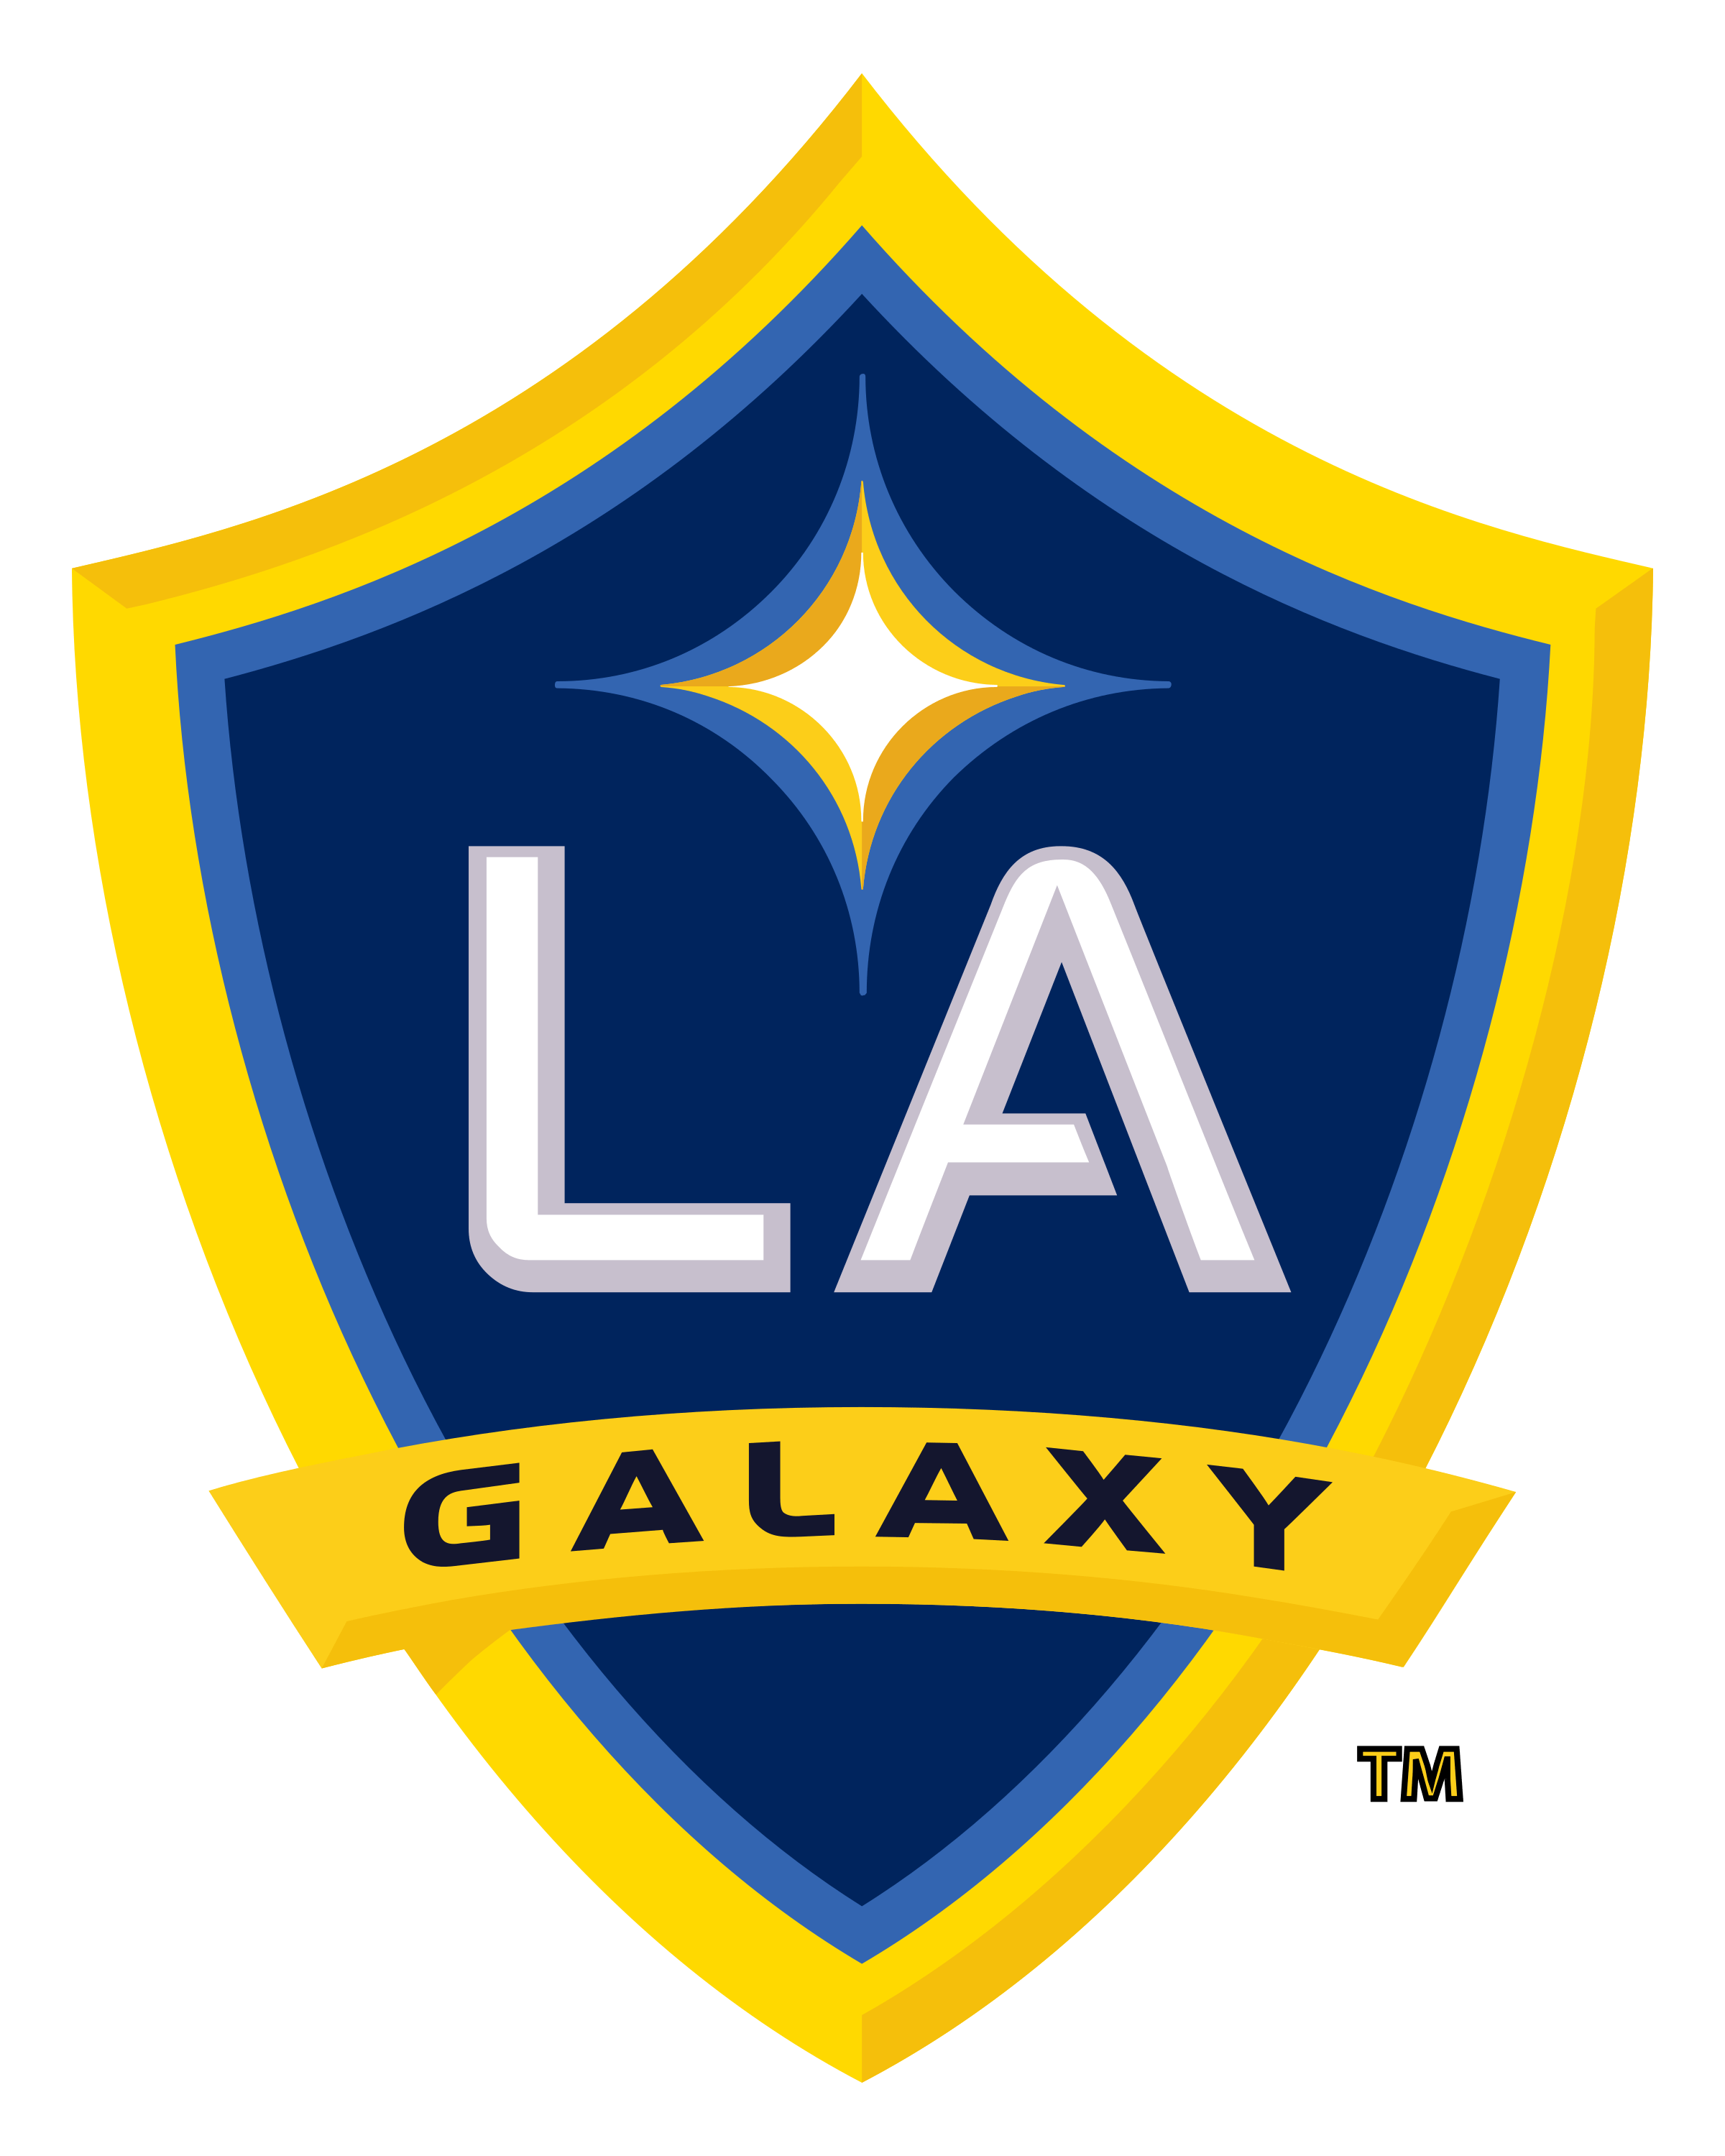 Galazy Logo - LA Galaxy Logo PNG Transparent & SVG Vector - Freebie Supply